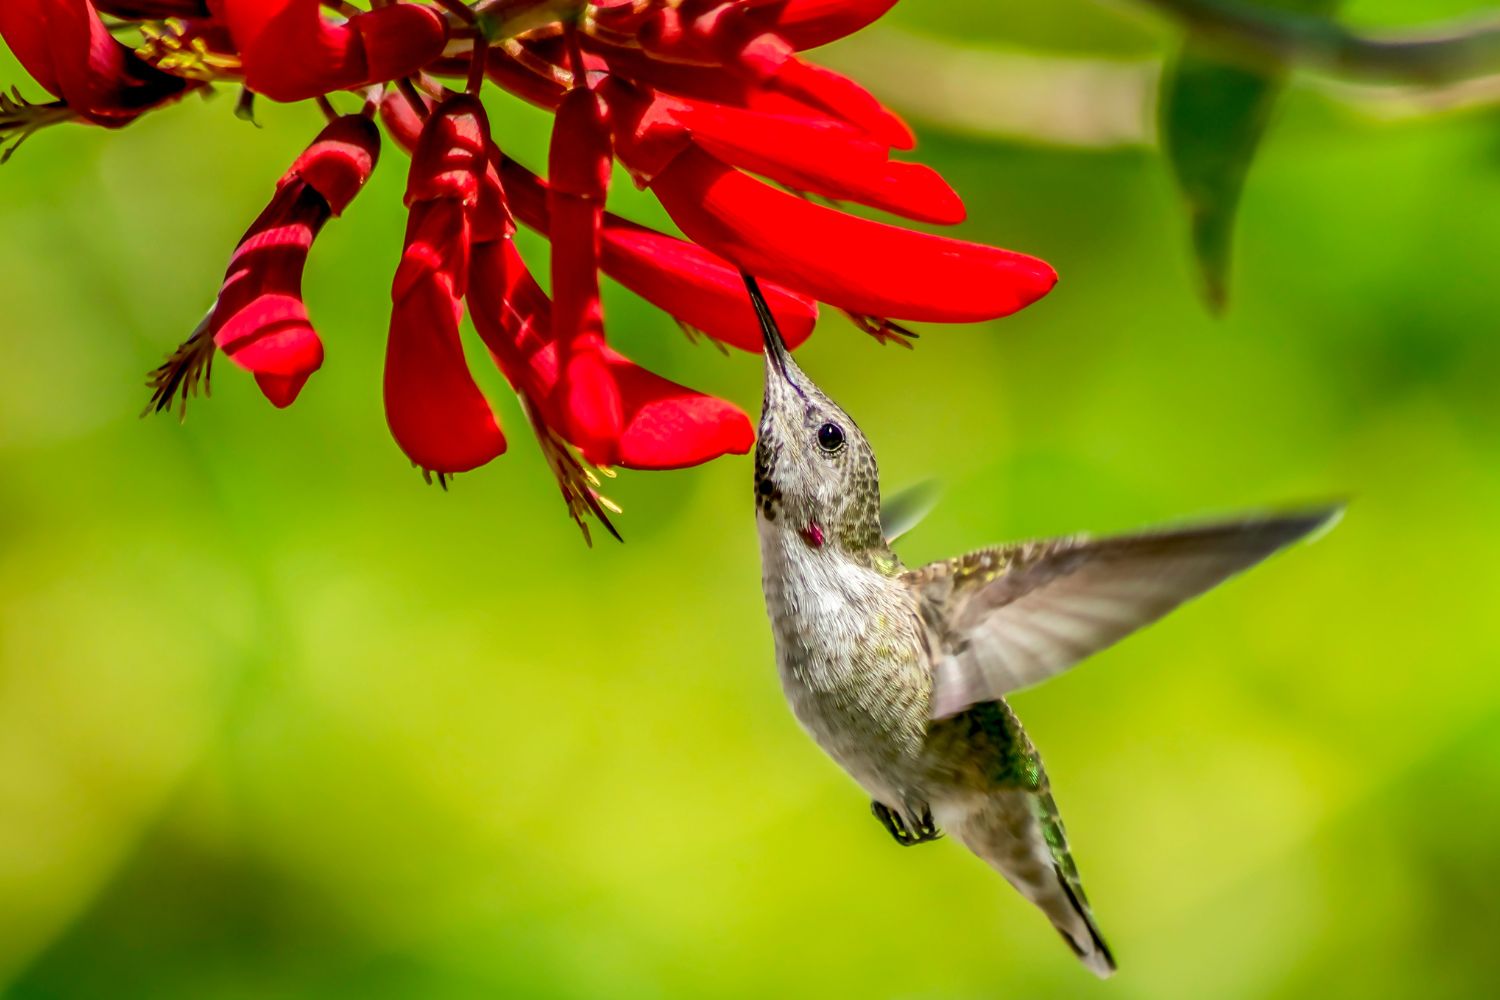 9. A hummingbird's favorite color